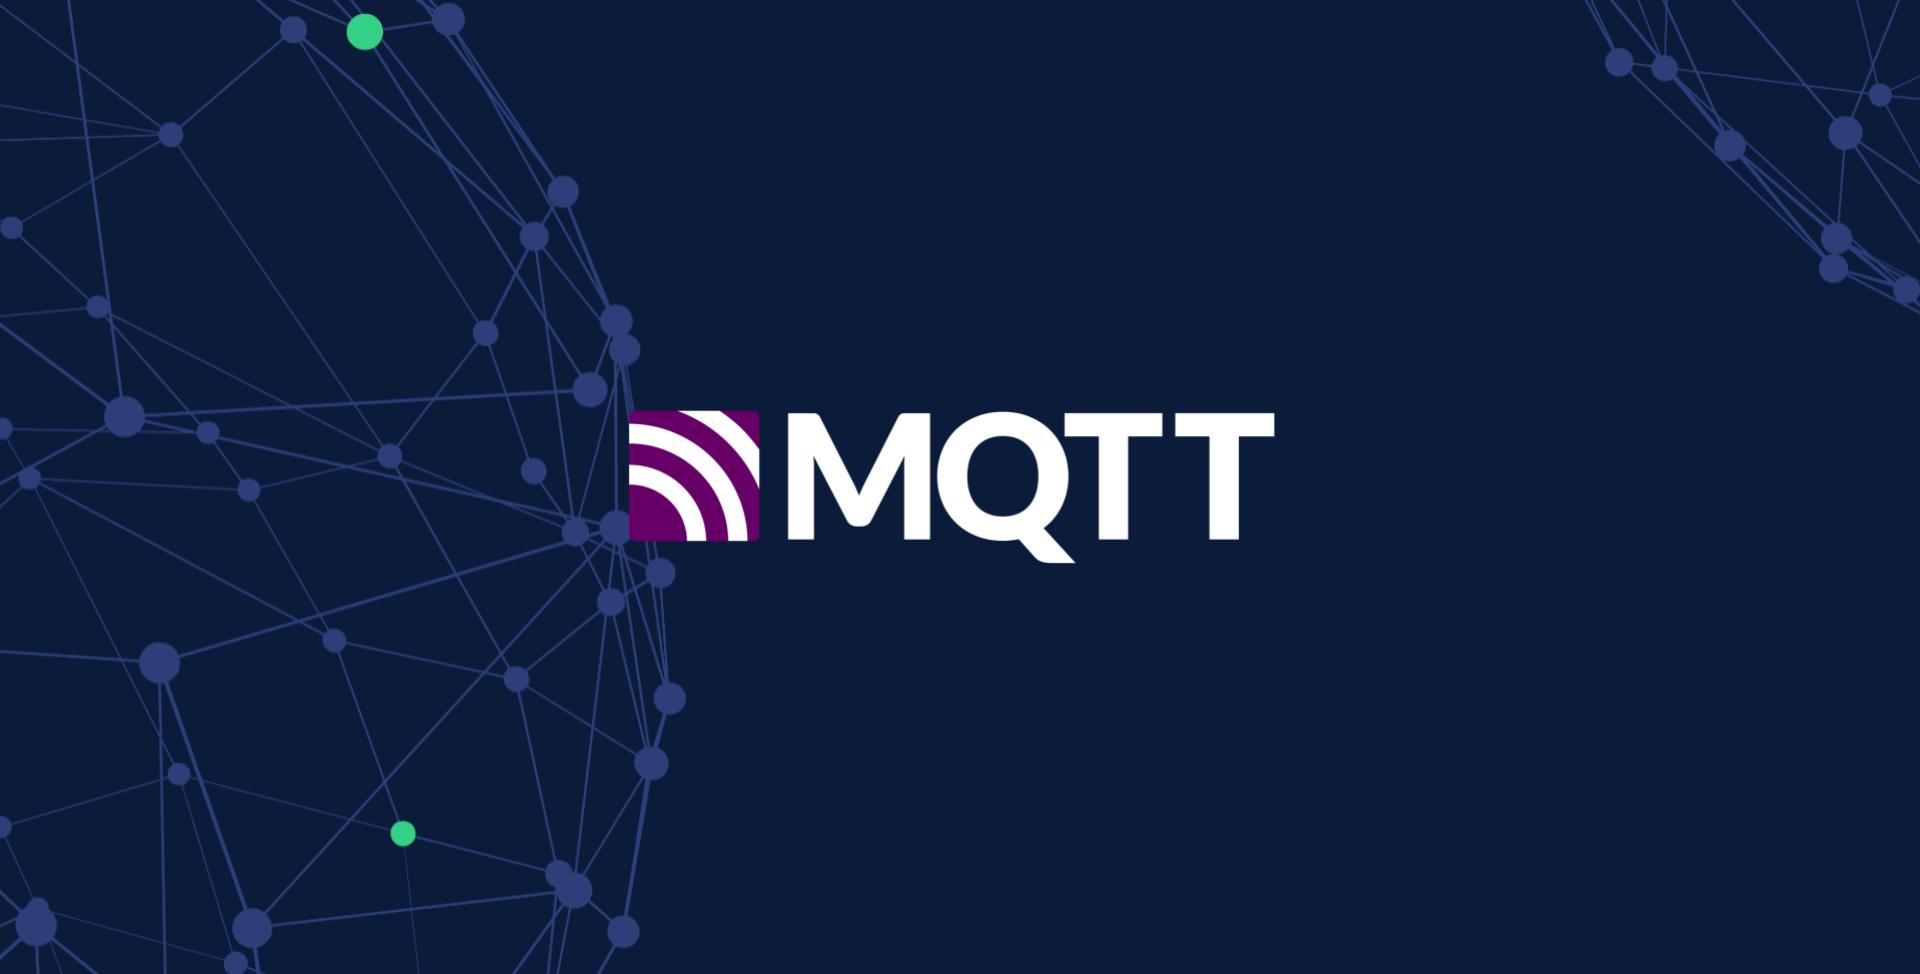 MQTT Performance Testing using Gatling